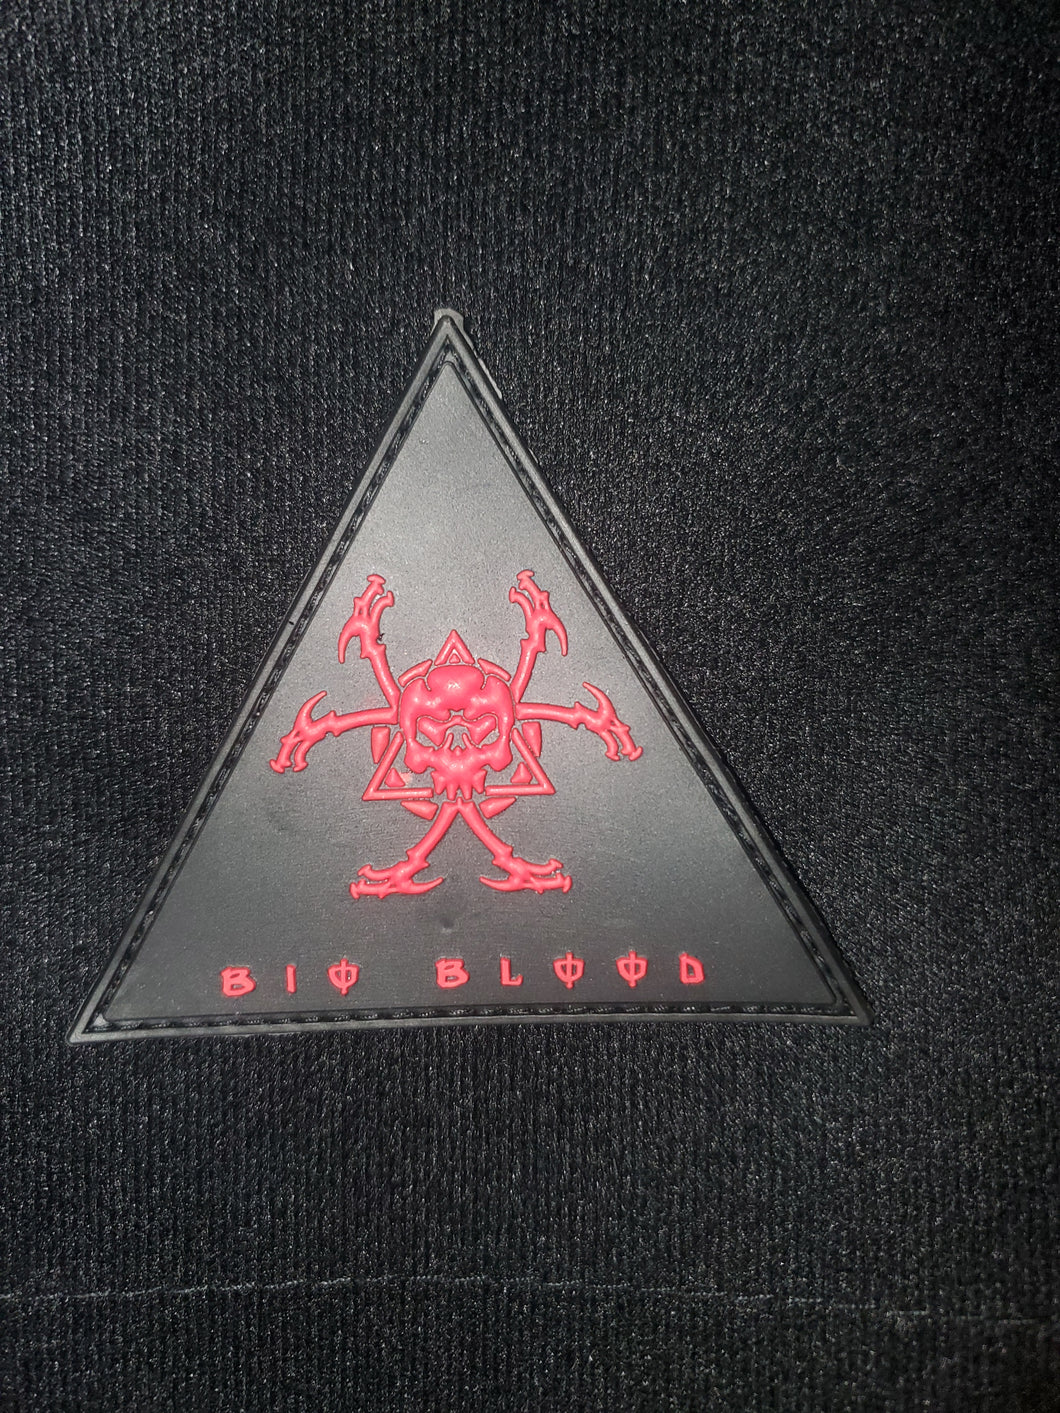 Bio Blood